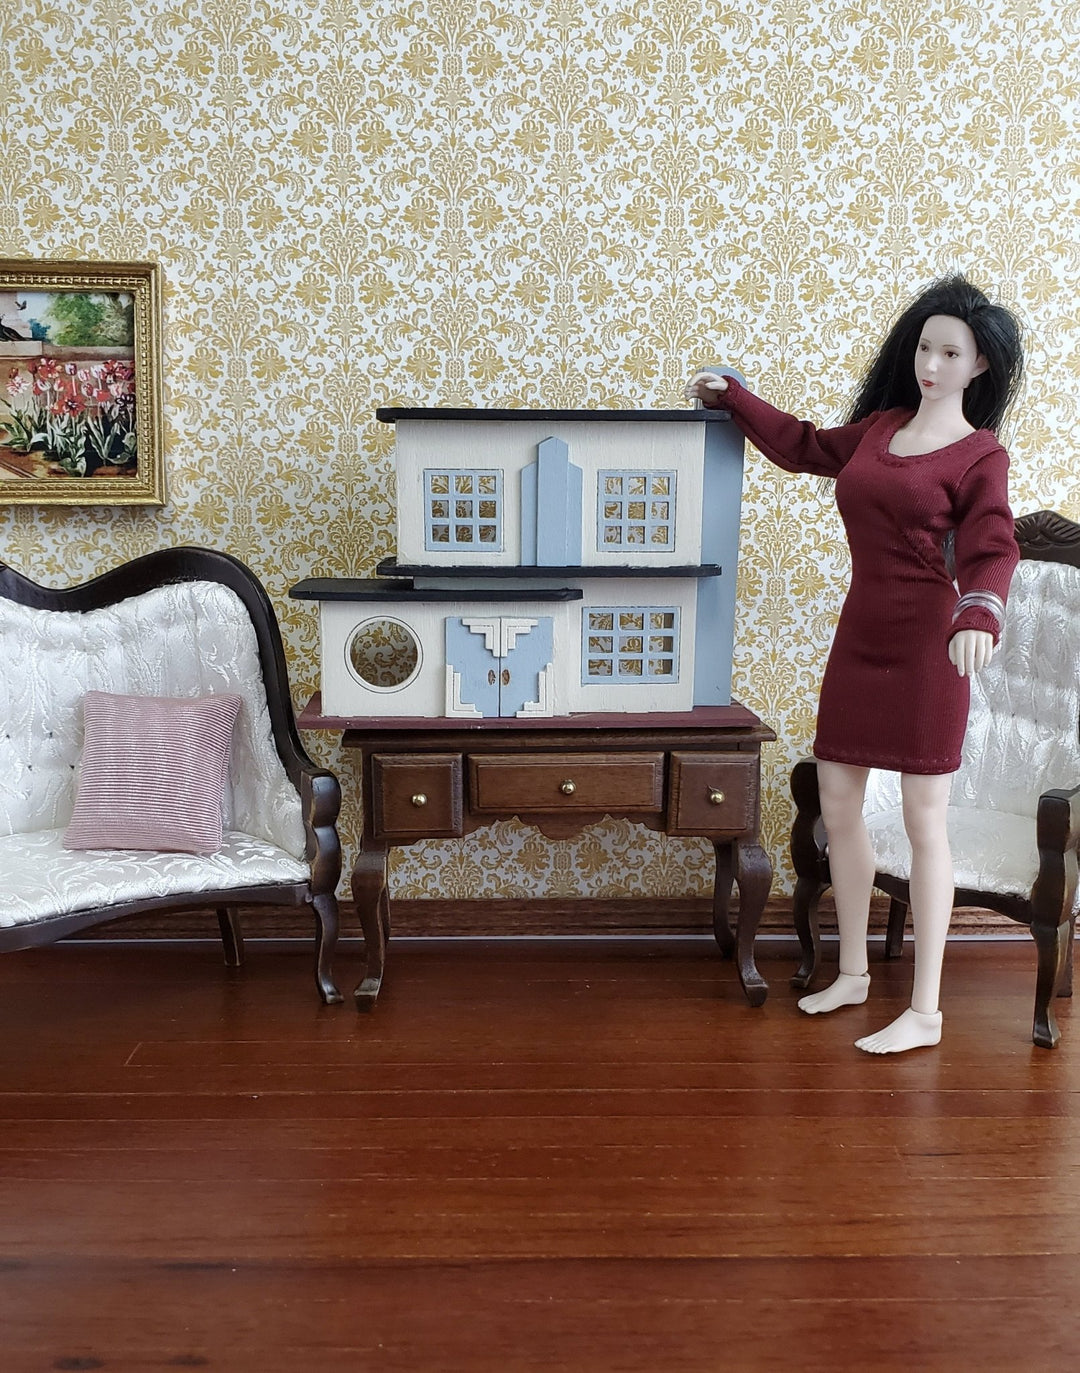 Dollhouse Miniature 1:144 Scale KIT House Art Deco Style With Fireplace - Miniature Crush